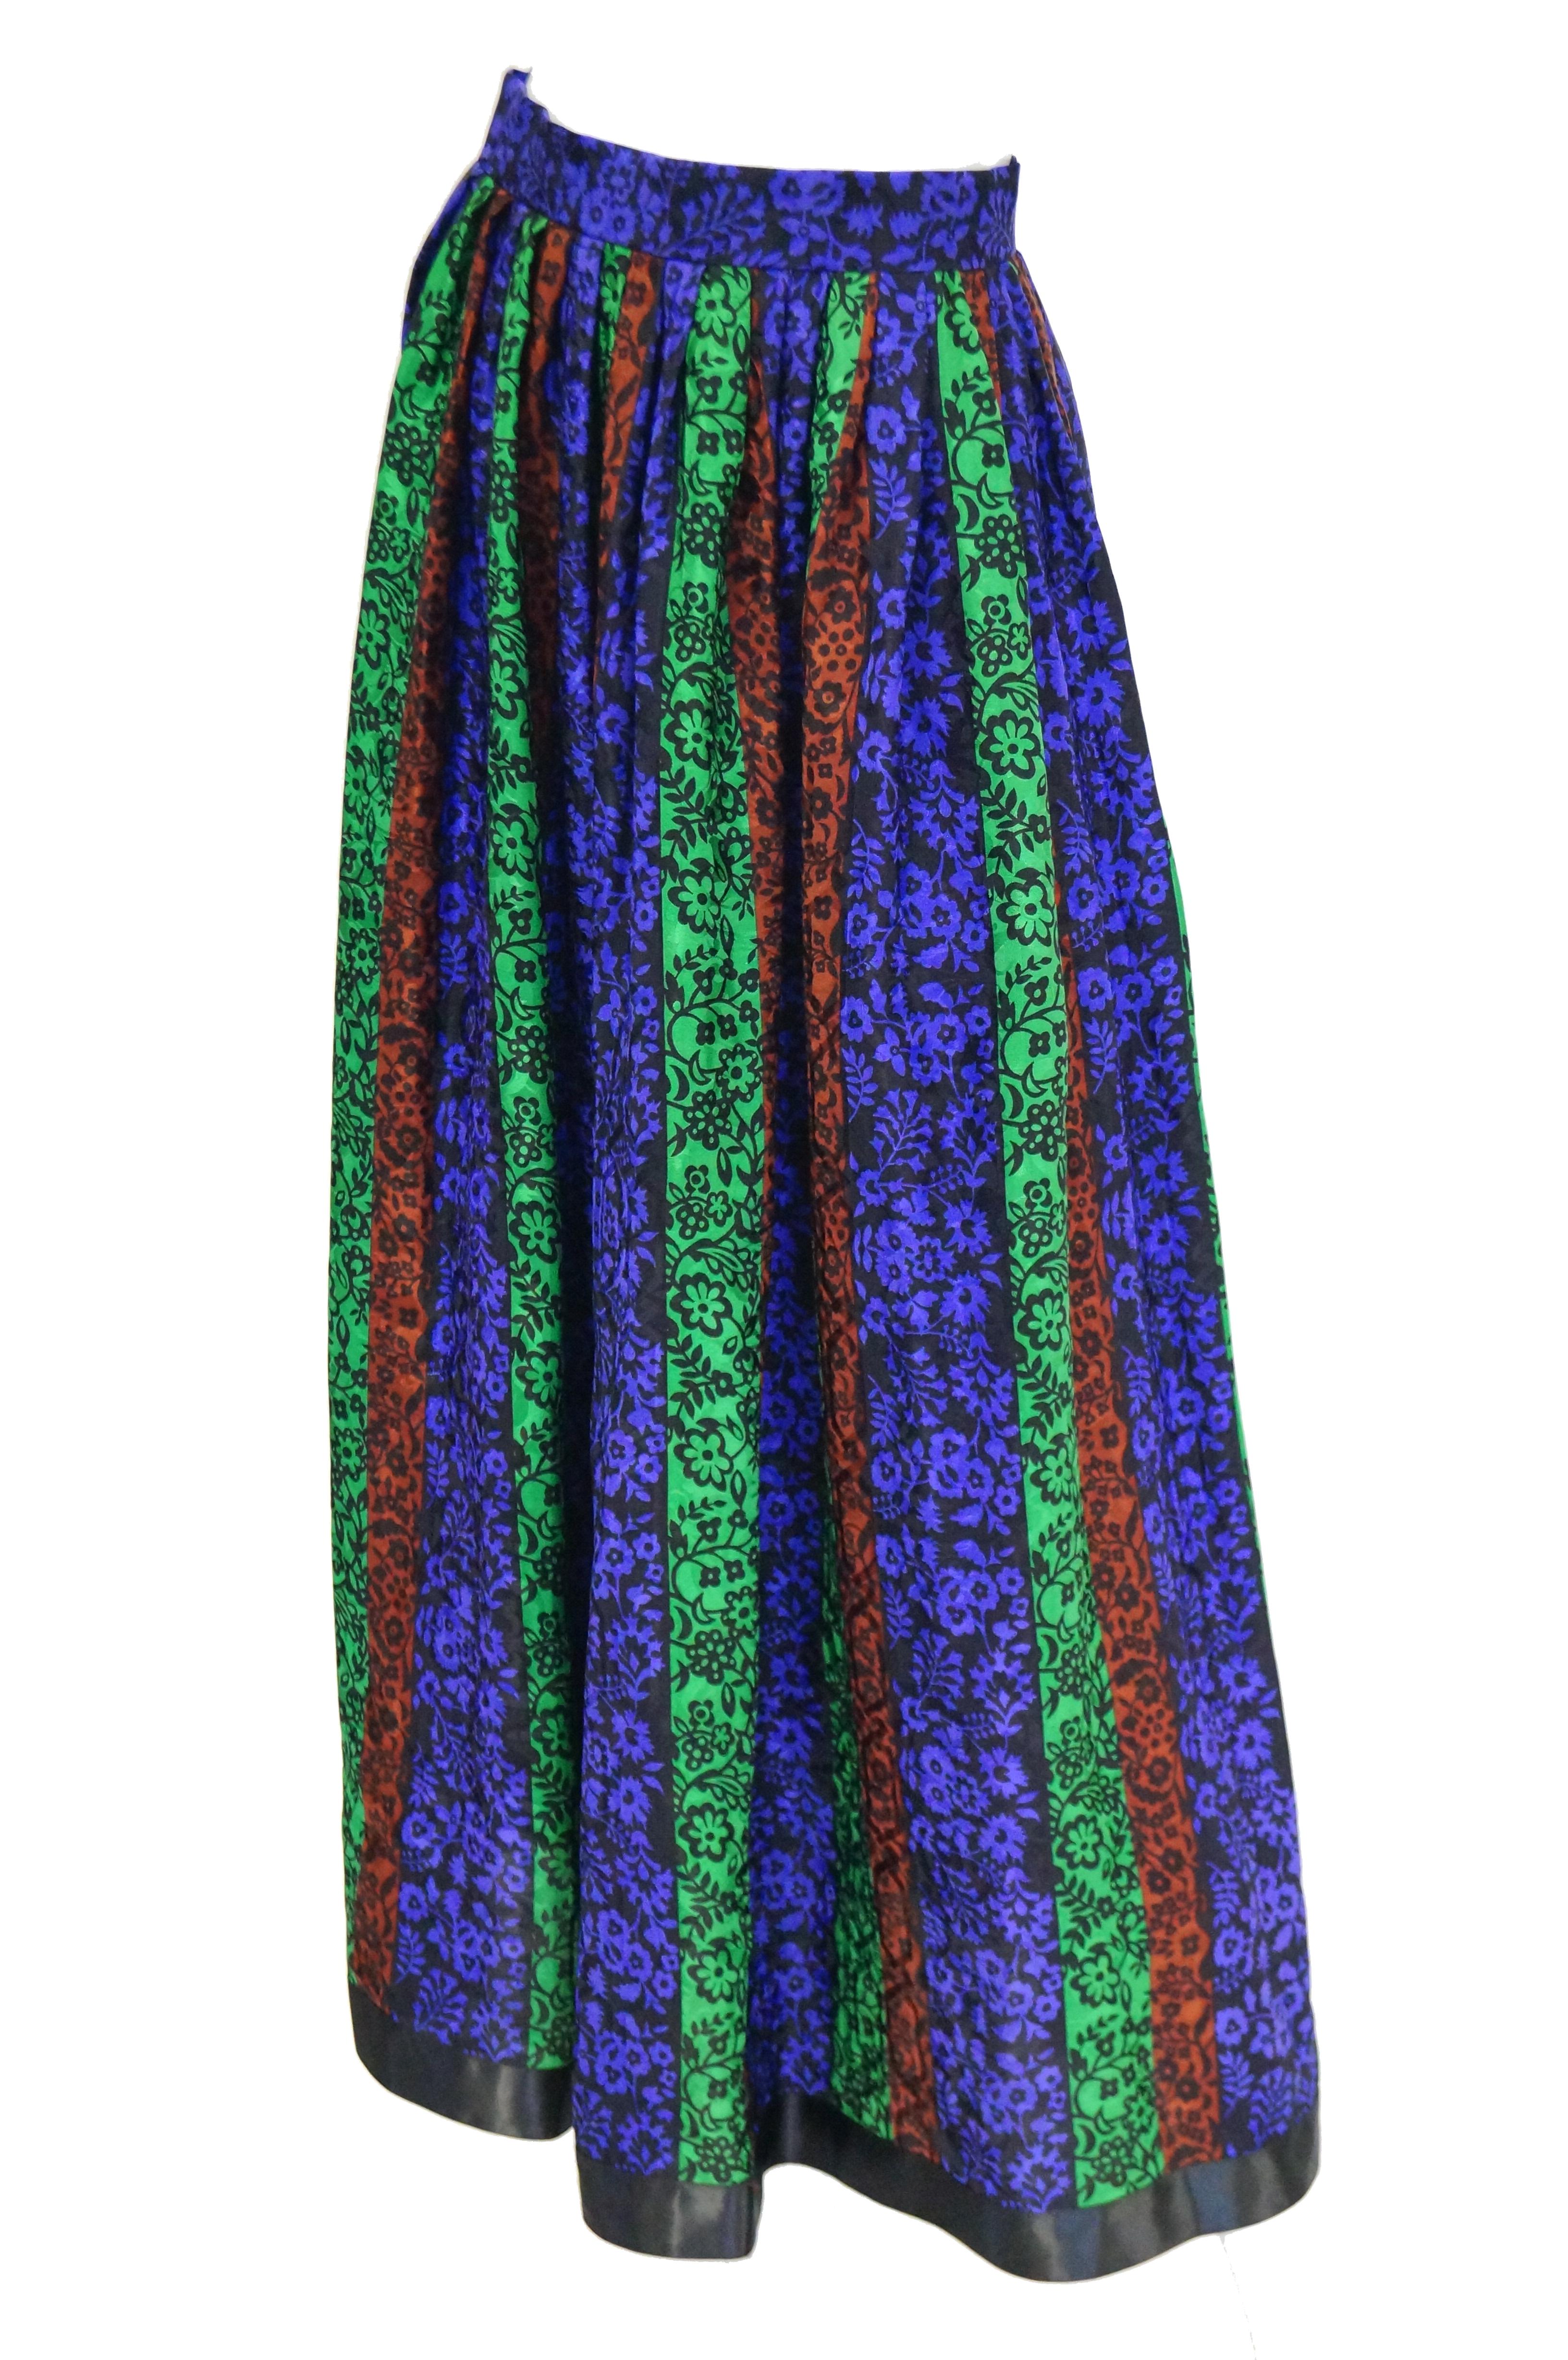 1970s Oscar de la Renta Silk Maxi Skirt in Blue, Green, Red Floral For Sale 1